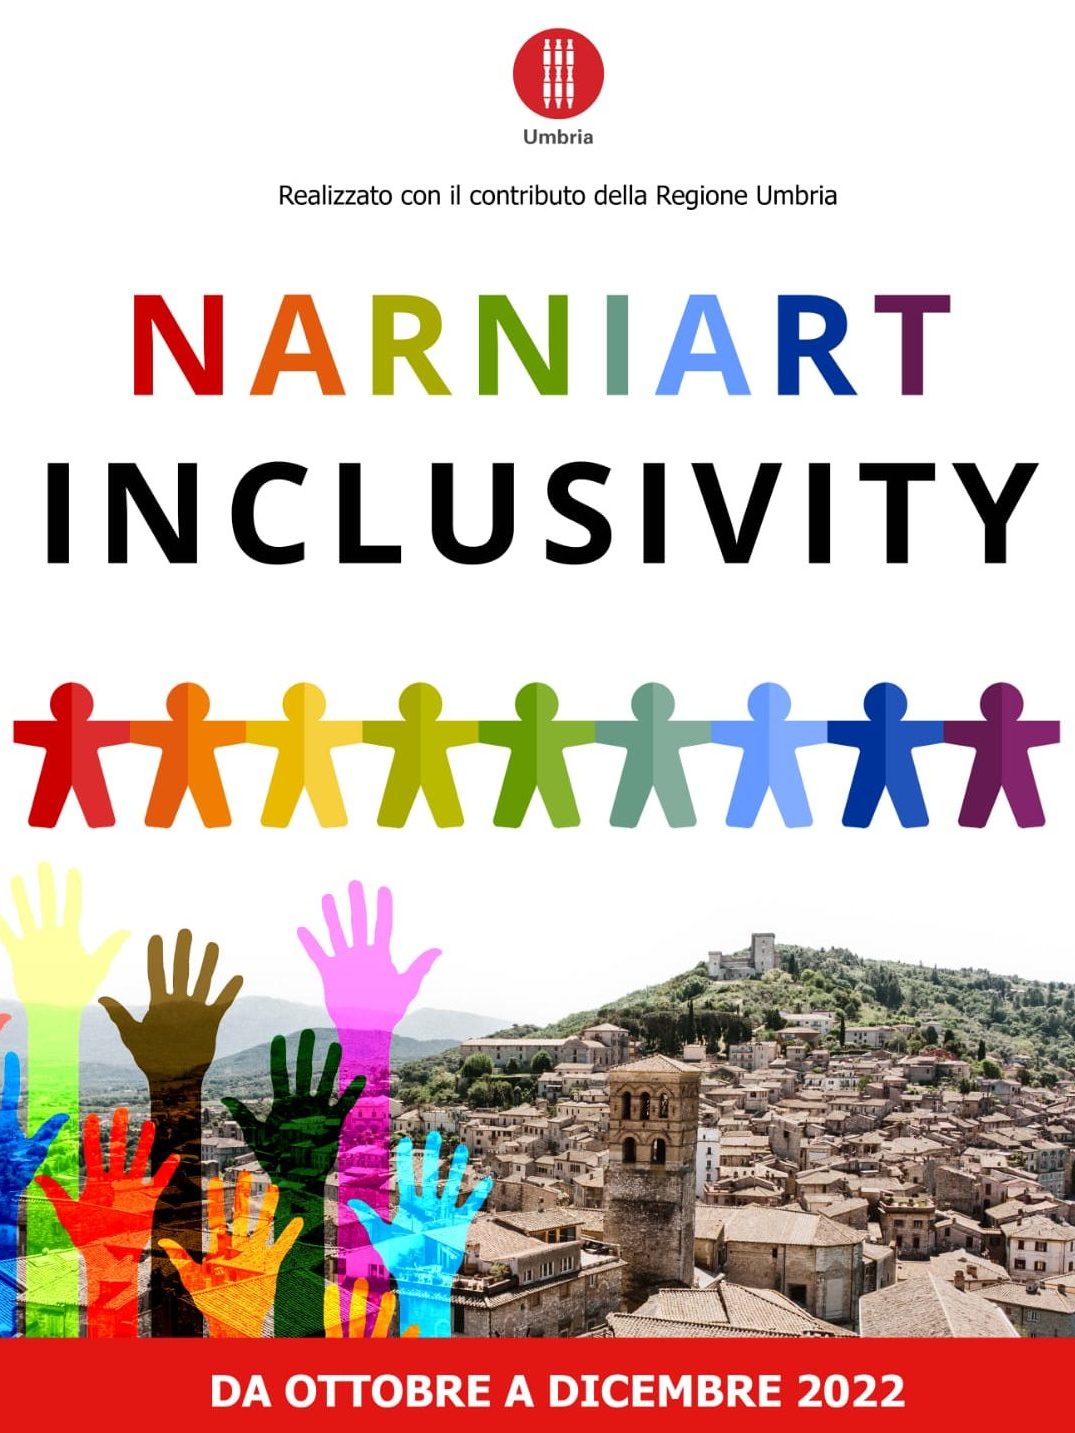 NarniArt Inclusivity 2022